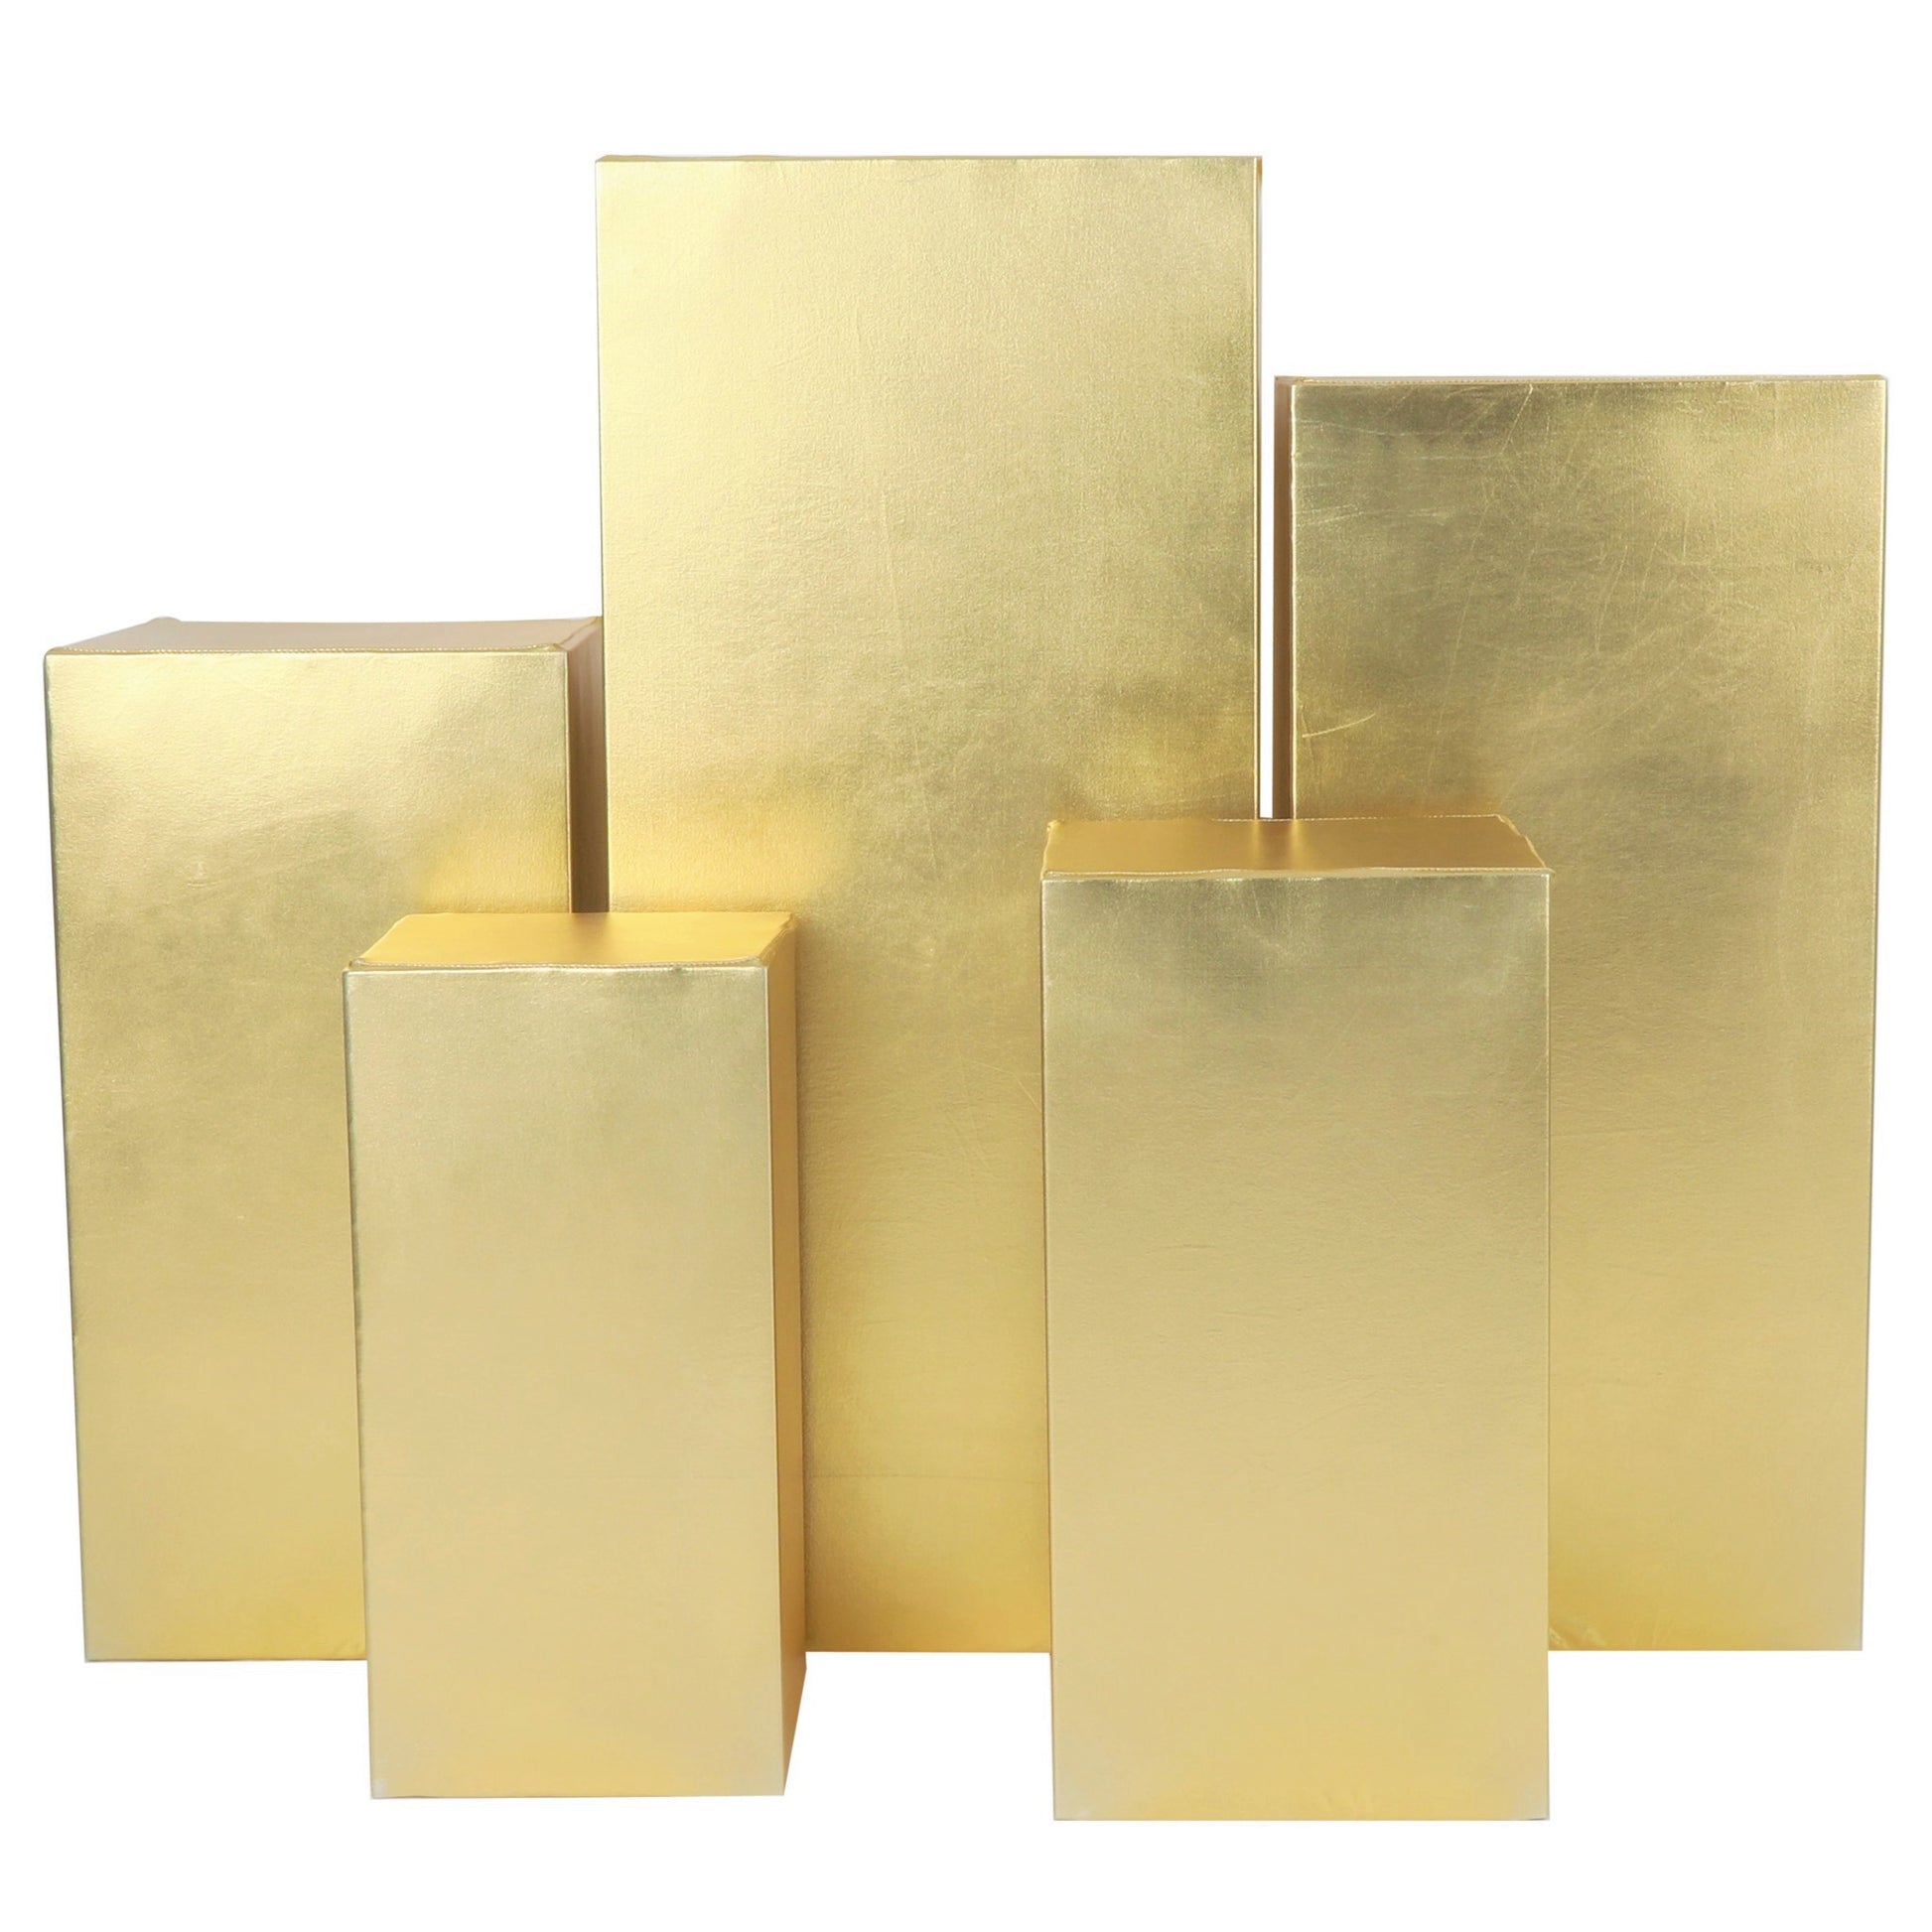 Spandex Covers for Square Metal Pillar Pedestal Stands 5 pcs/set - Metallic Gold